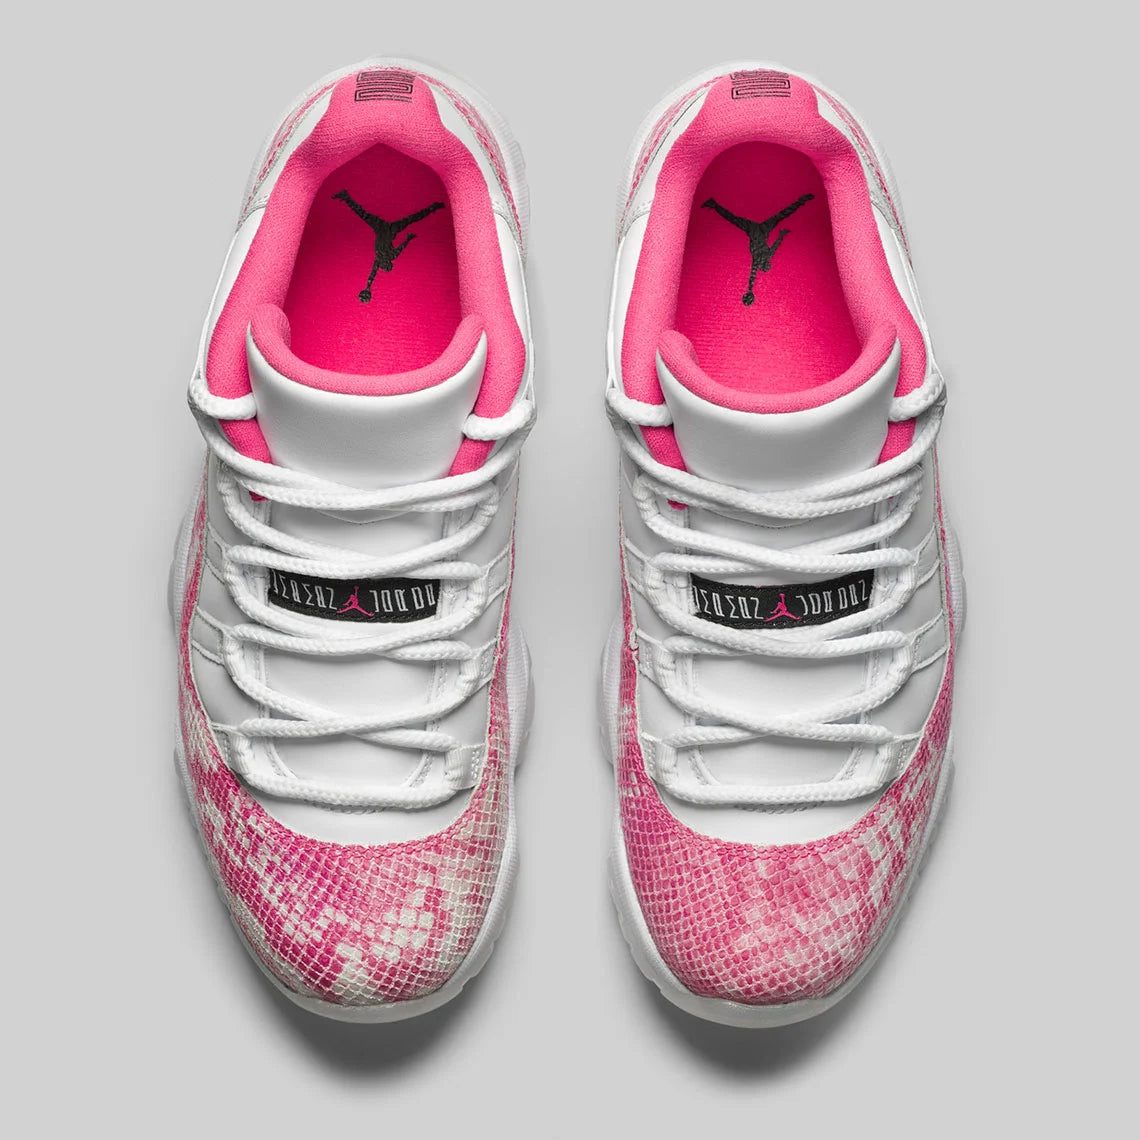 Air Jordan 11 Retro Low Pink Snakeskin (2019)